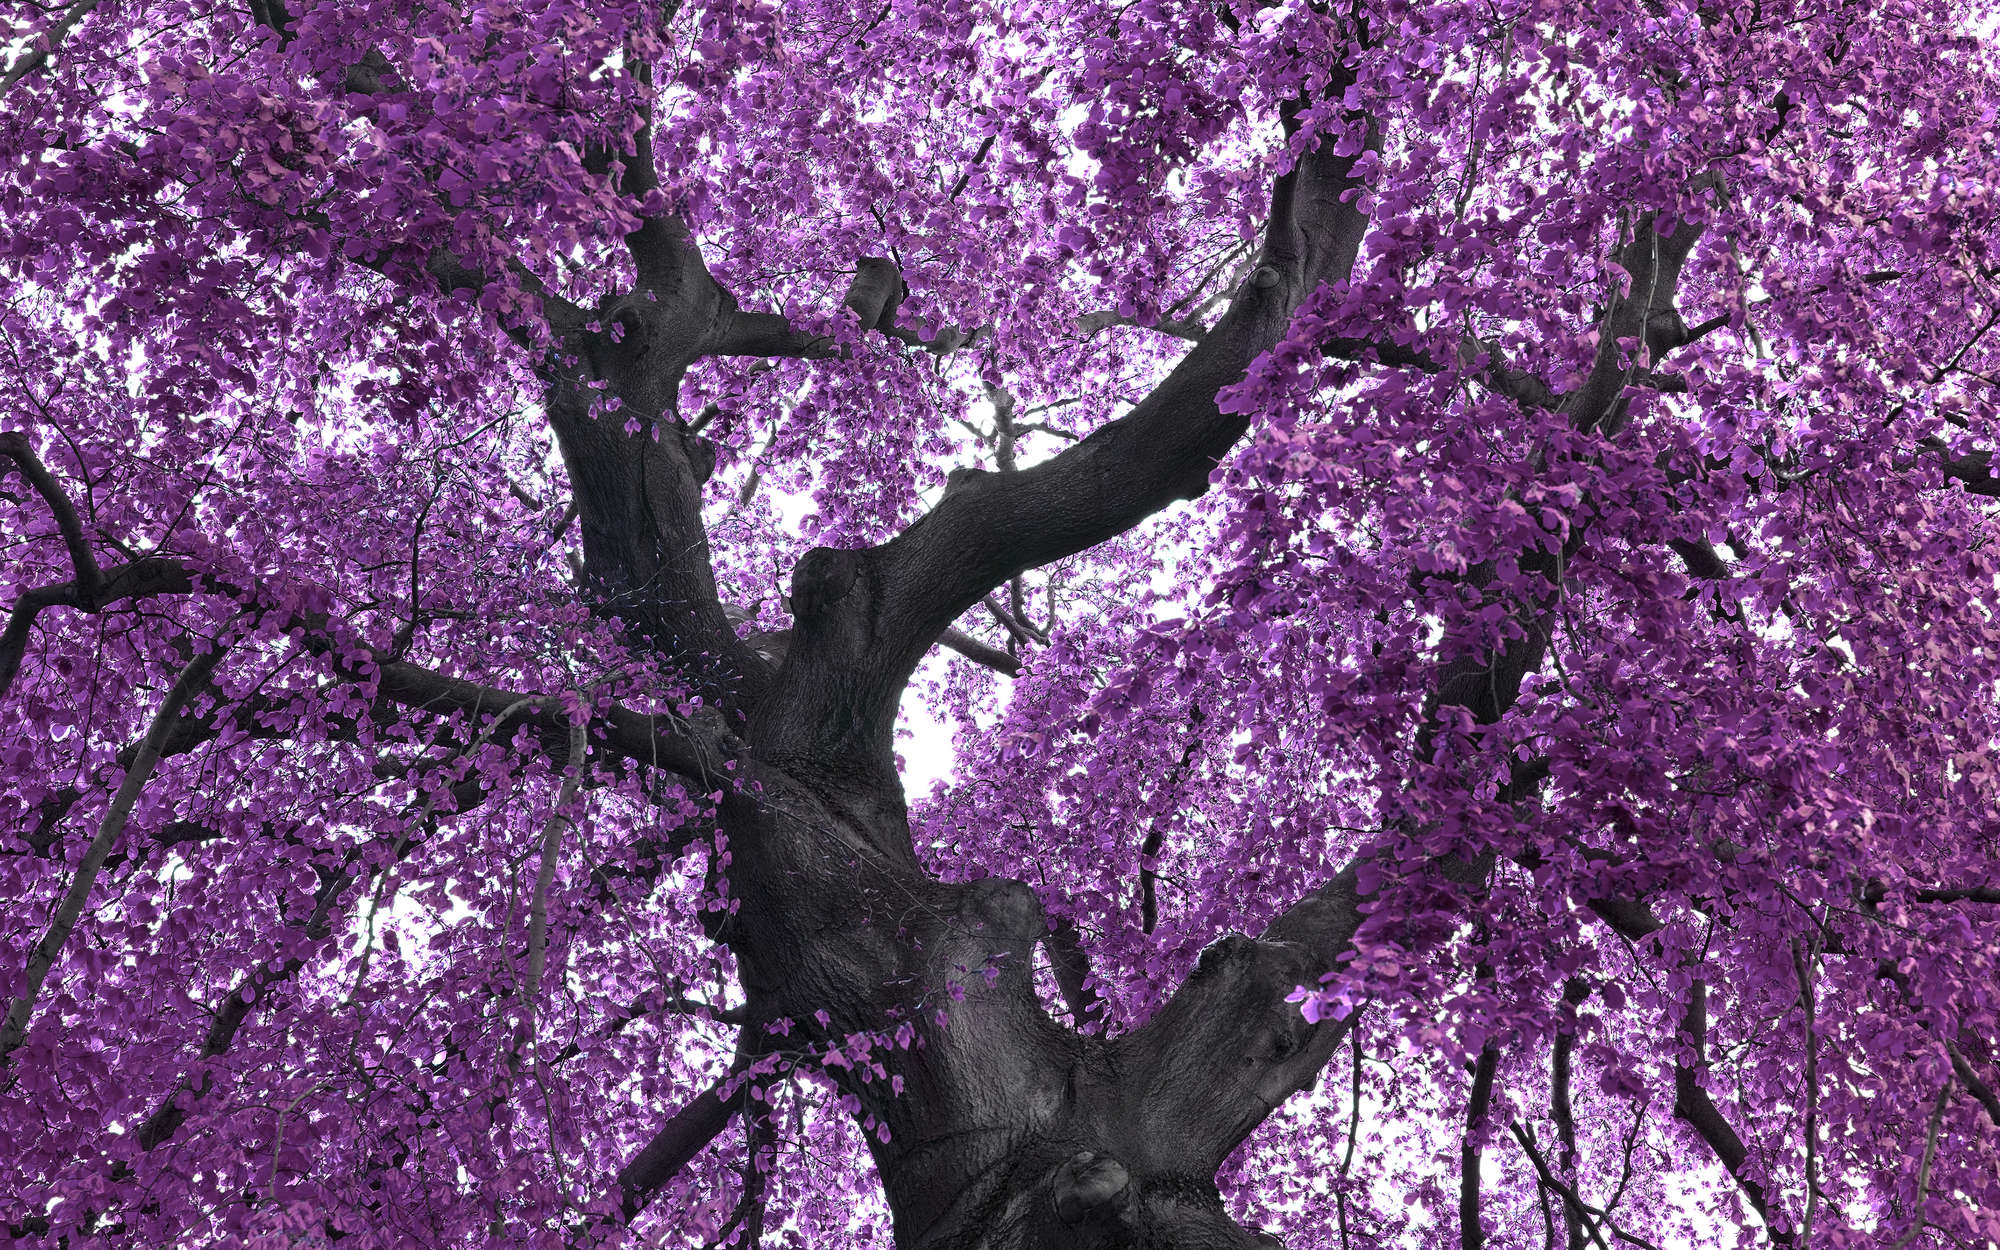             Fototapete Baum mit Lila Baumkrone – Perlmutt Glattvlies
        